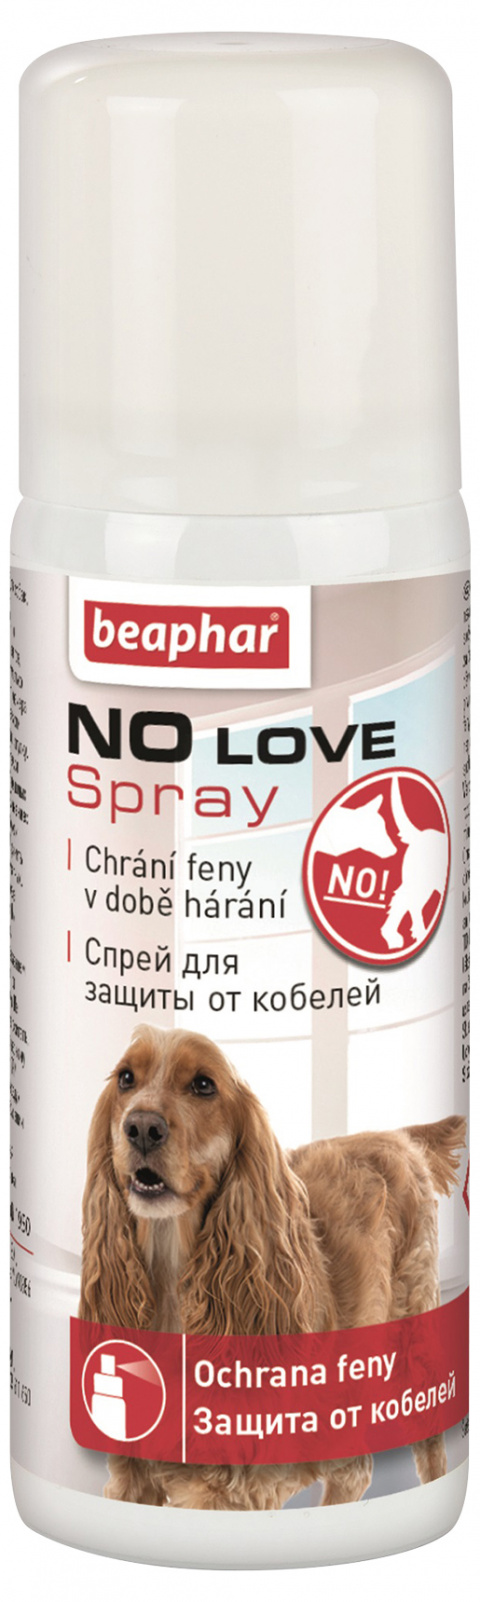 Beaphar No Love spray pro háravé feny 50ml